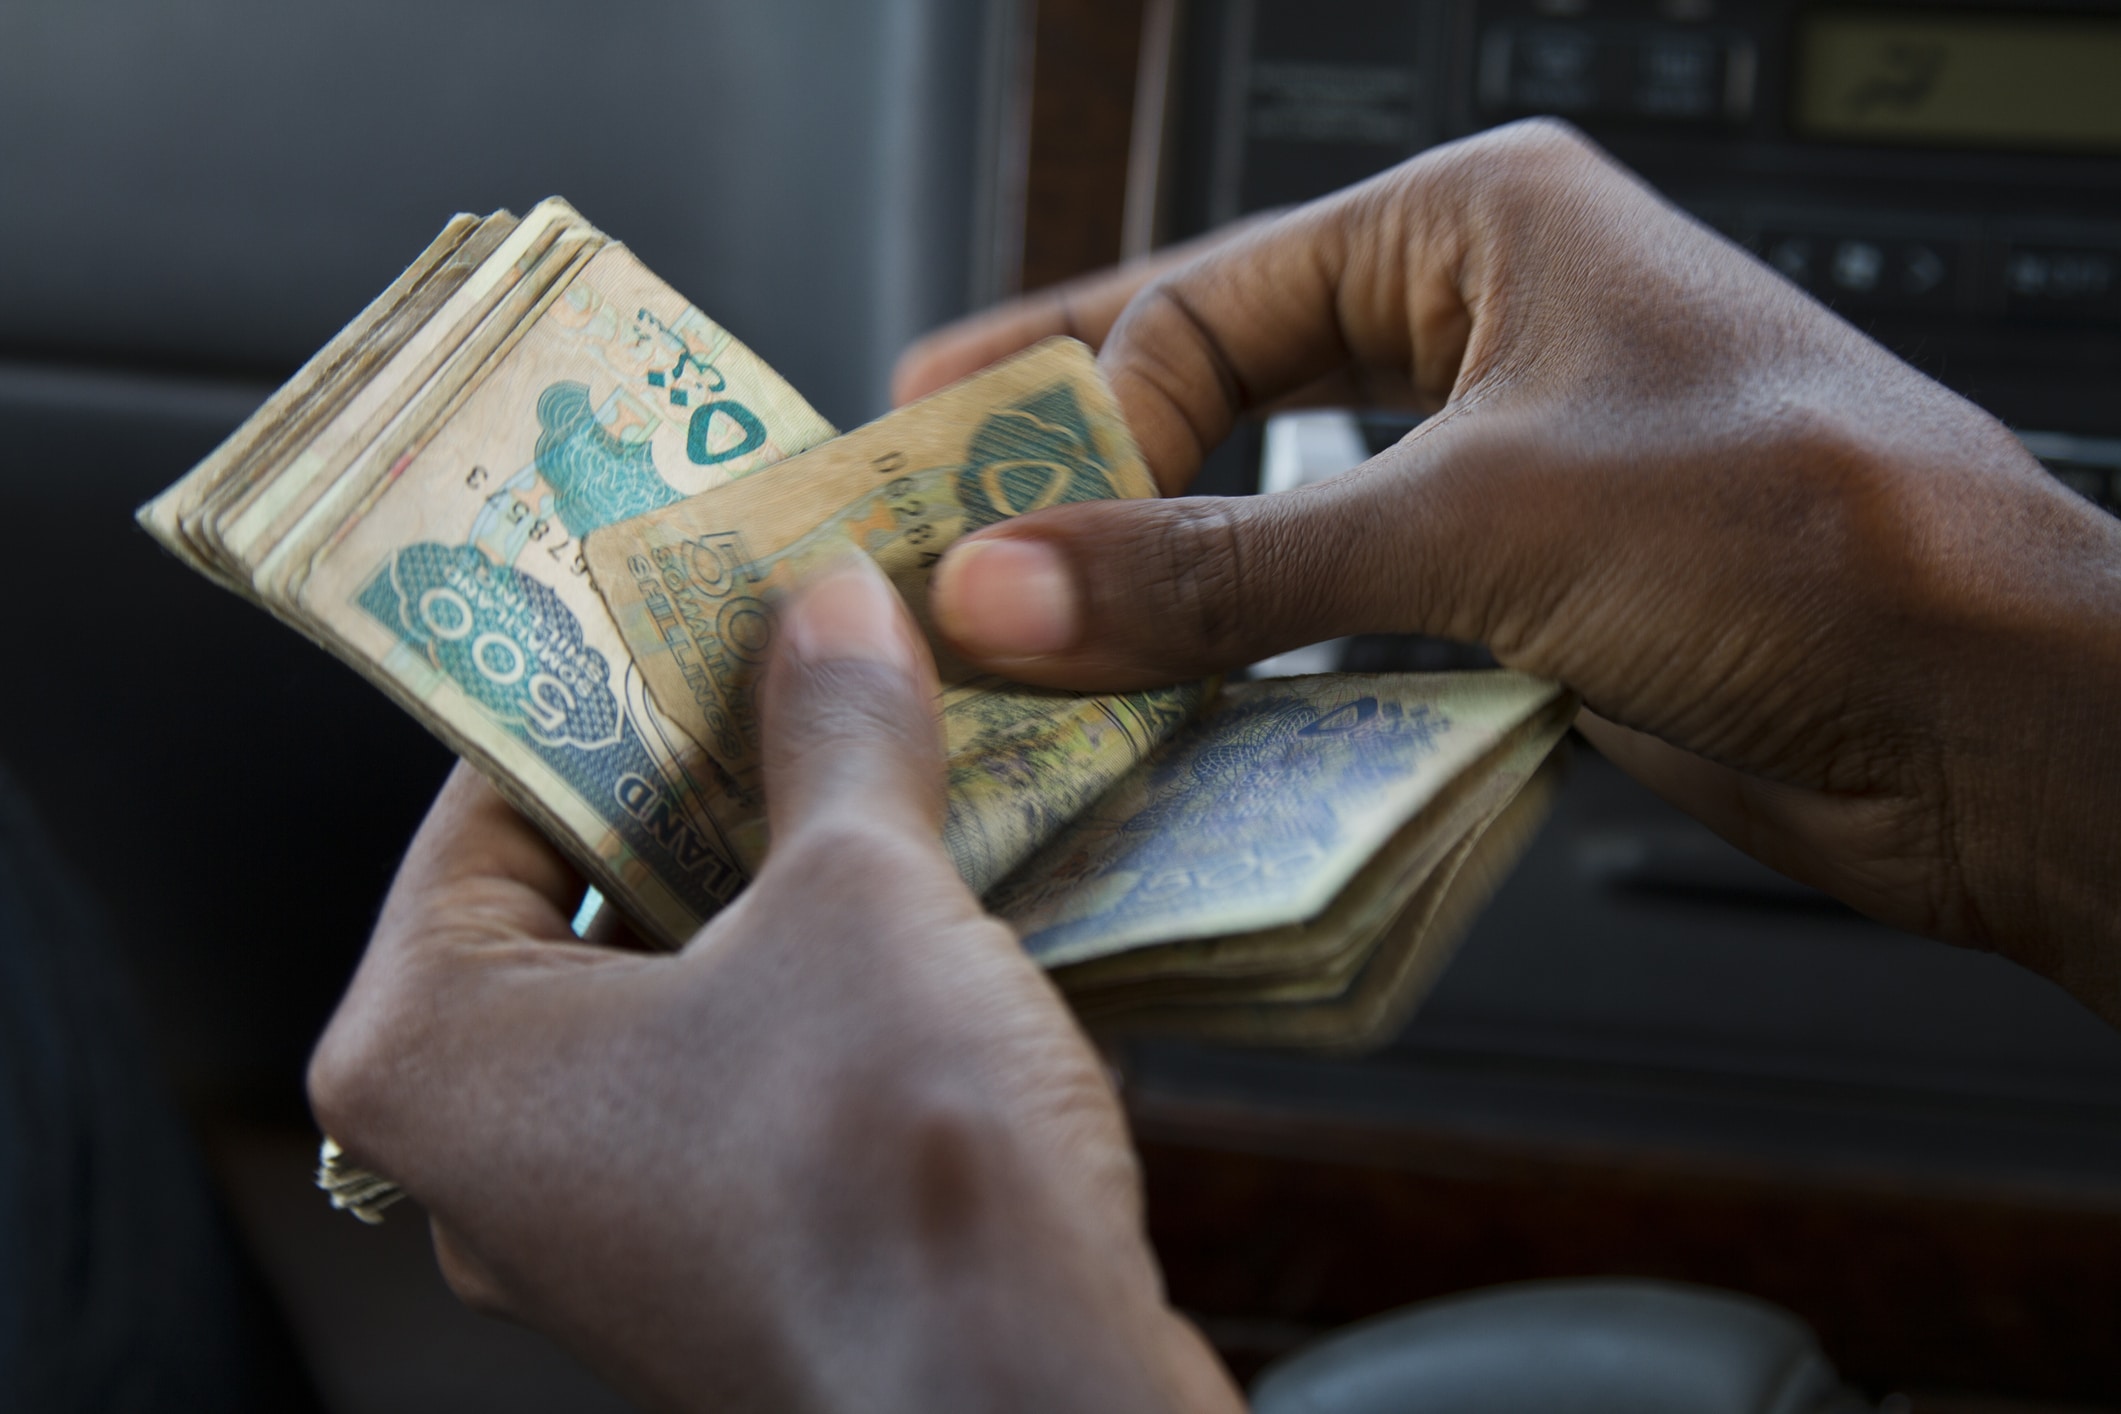 Counting the Somaliland shilling